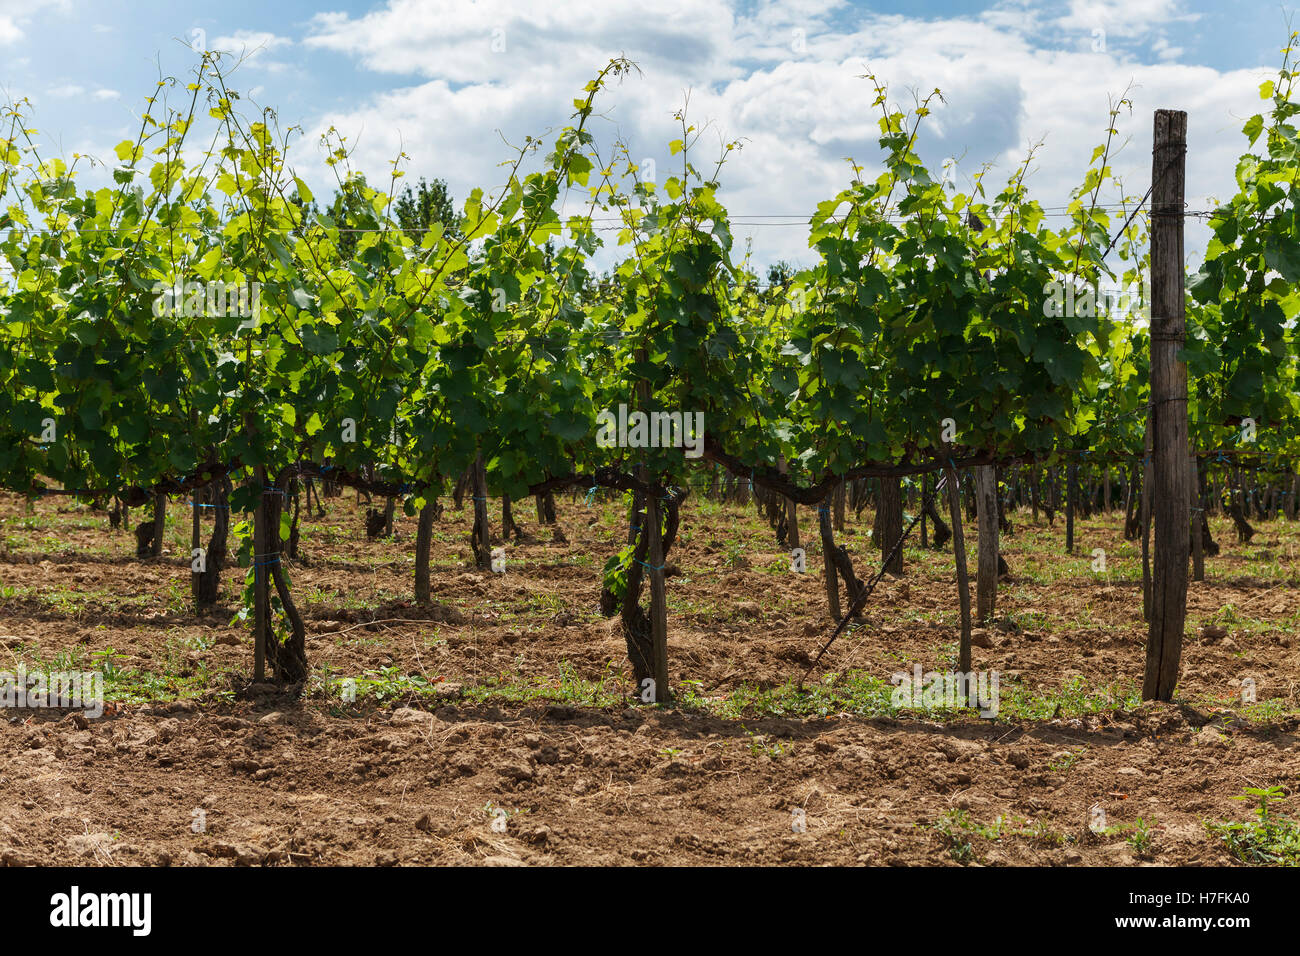 Vineyard - green viticulture under cloudy sky, Tokaj, Hungary, Europe Stock Photo